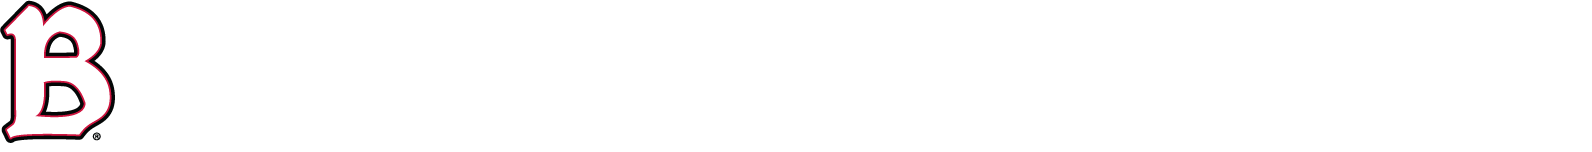 Benedictine-university-logo-homepage-link